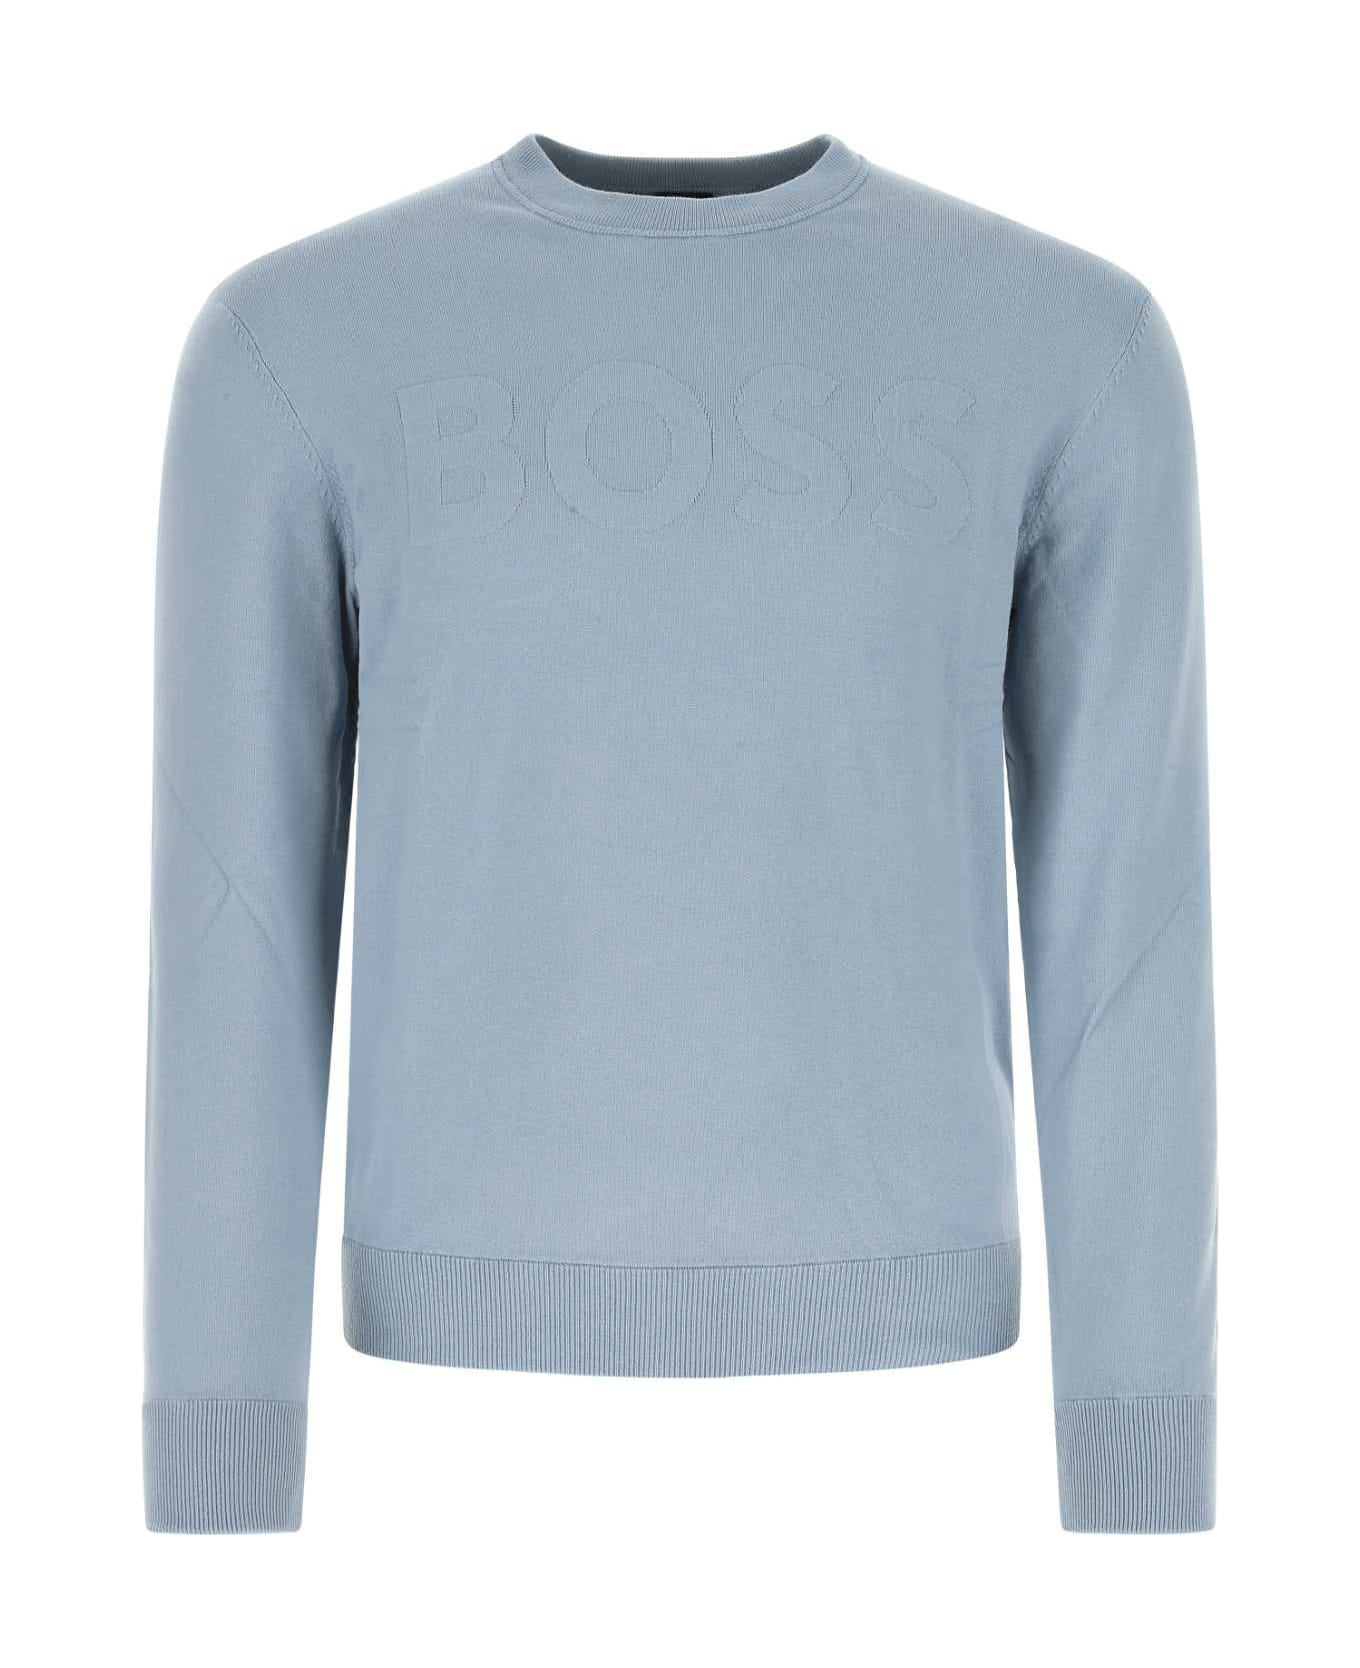 Hugo Boss Pastel Light-blue Cotton Blend Sweater - 451